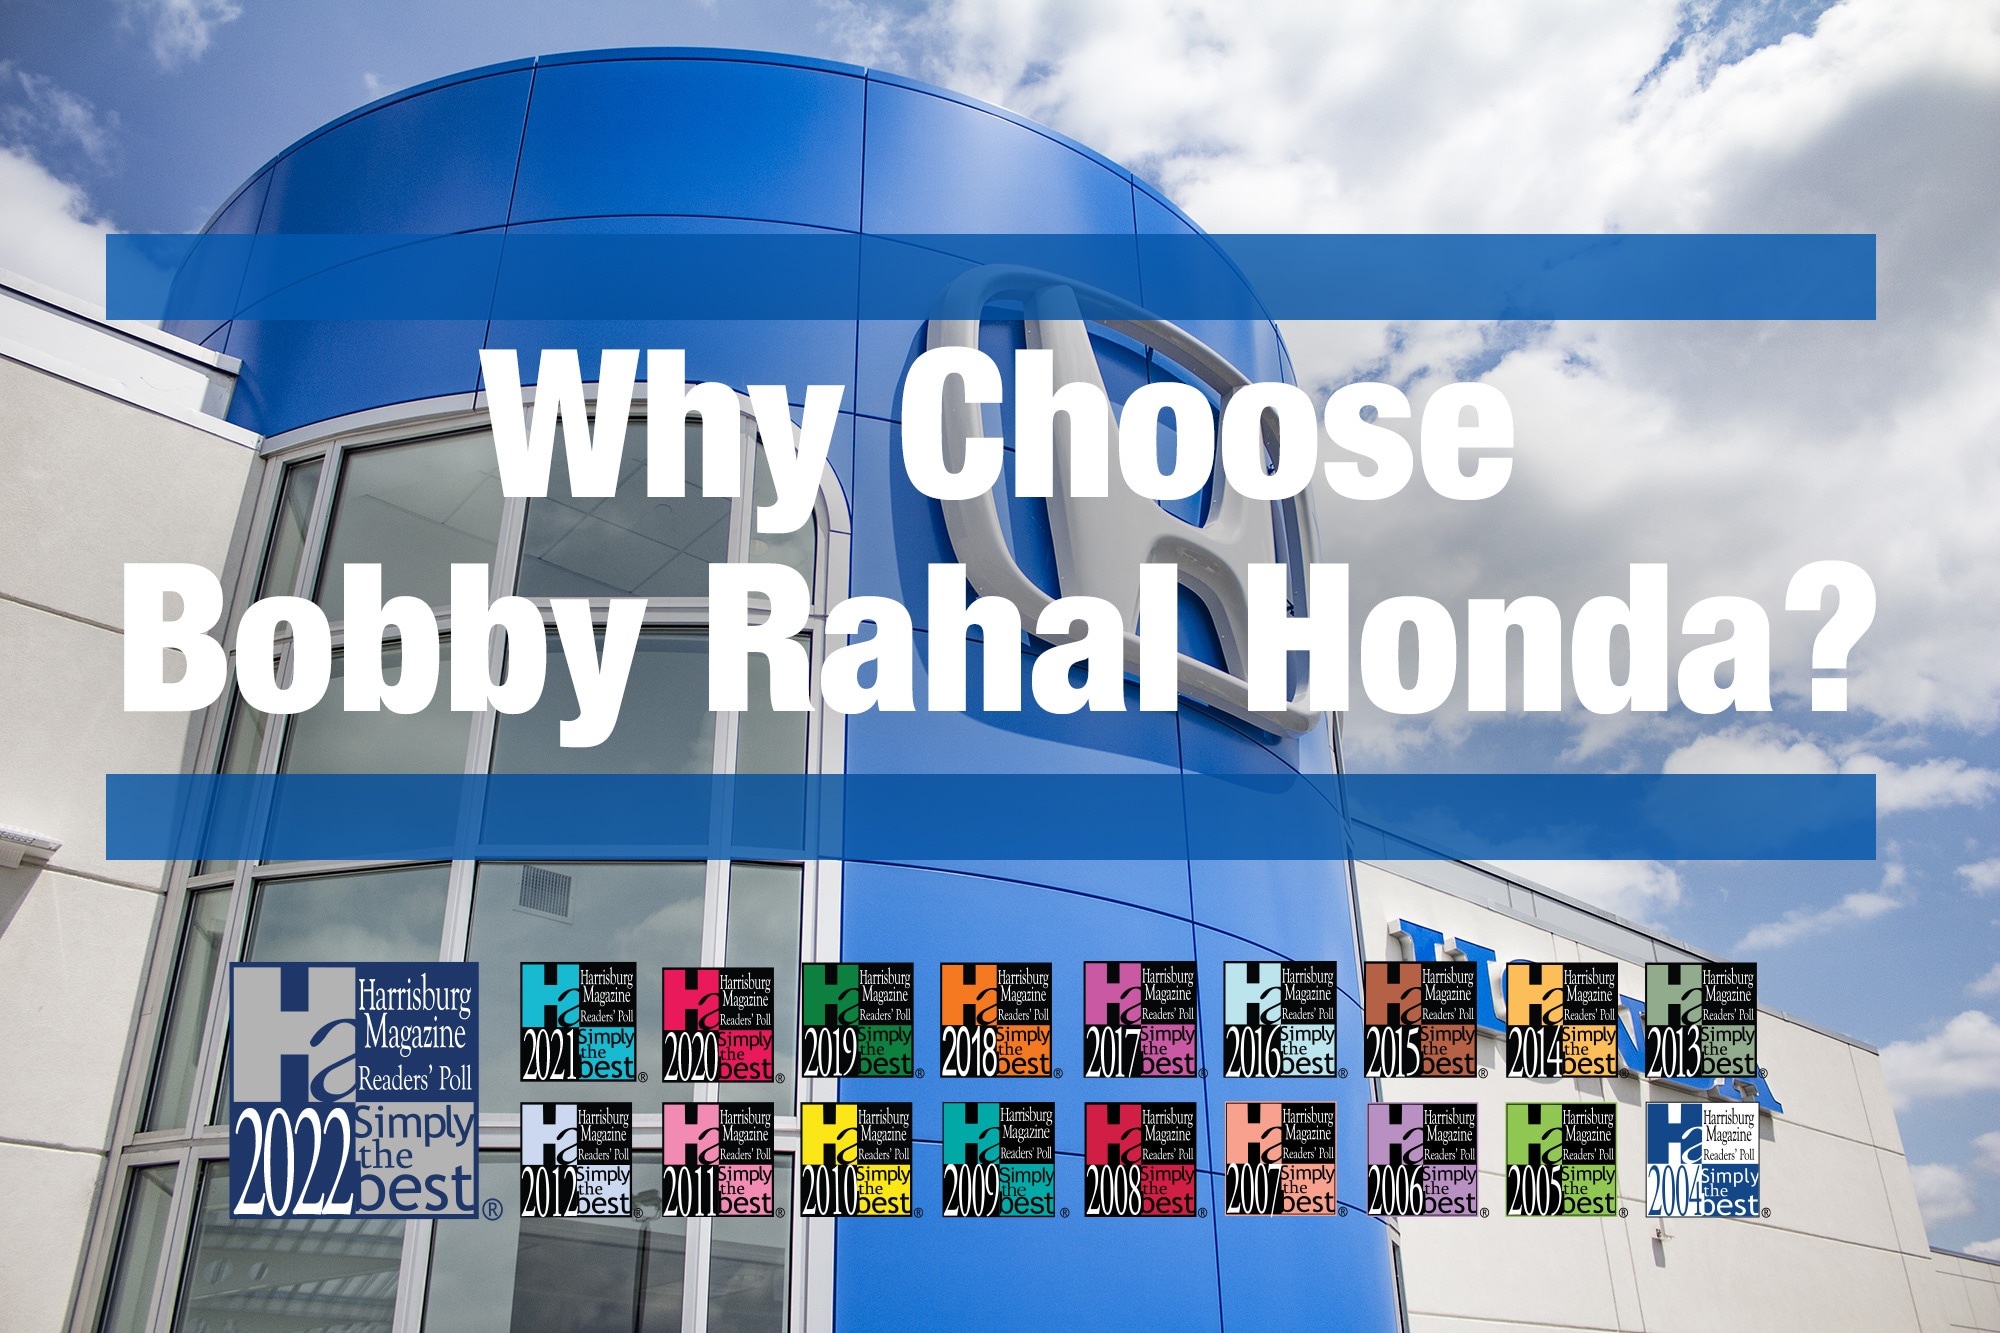 Bobby Rahal Honda - Harrisburg Magazine's Simply the Best